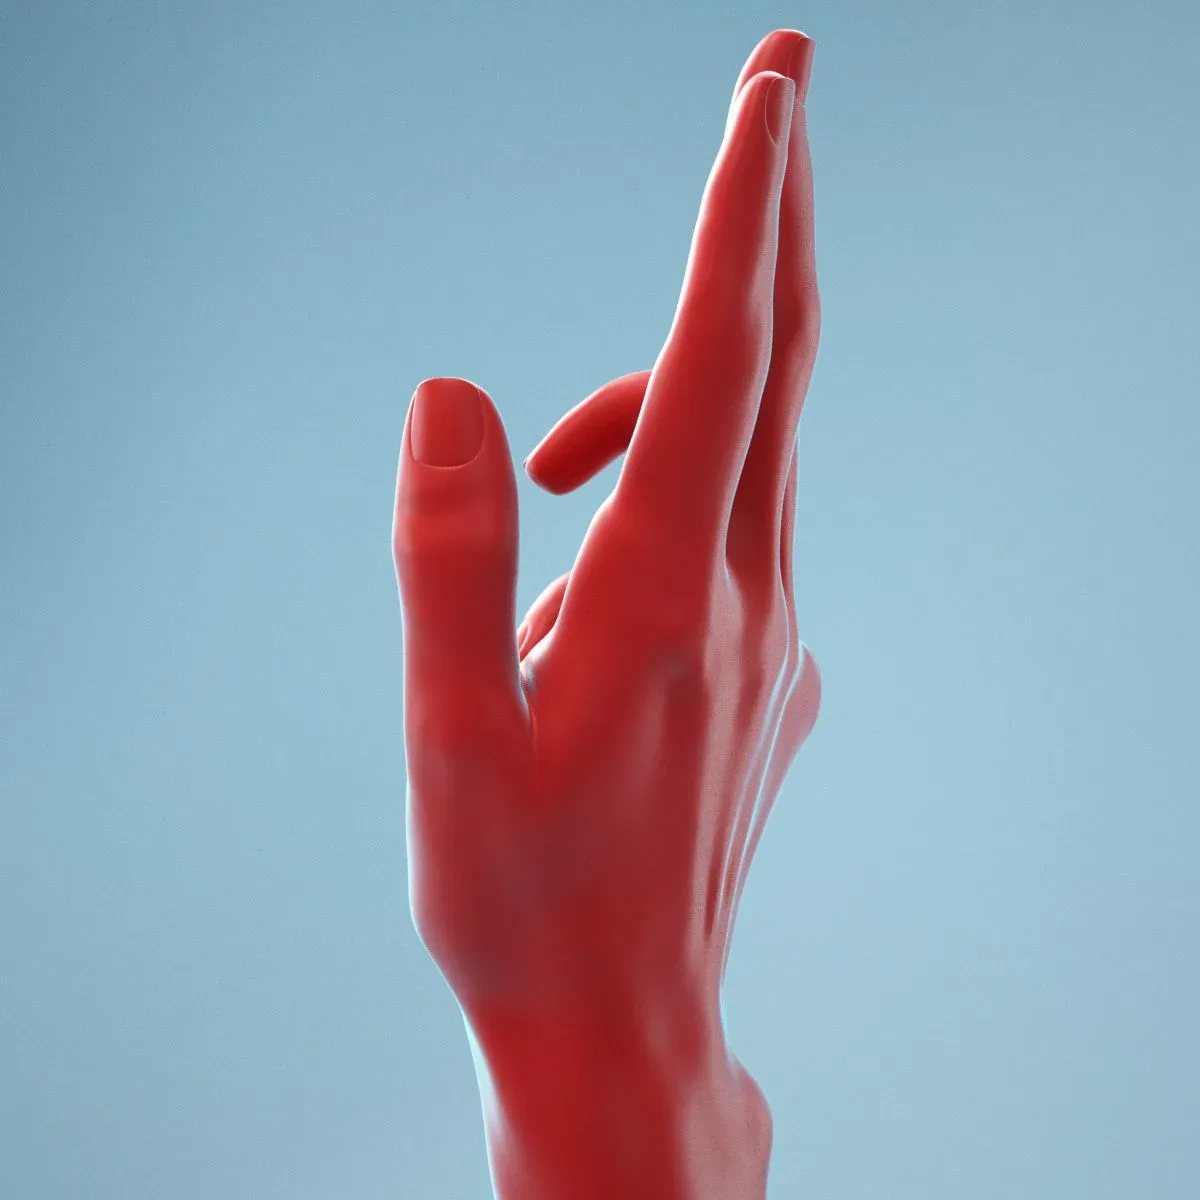 Holistic Gesture Realistic Hand